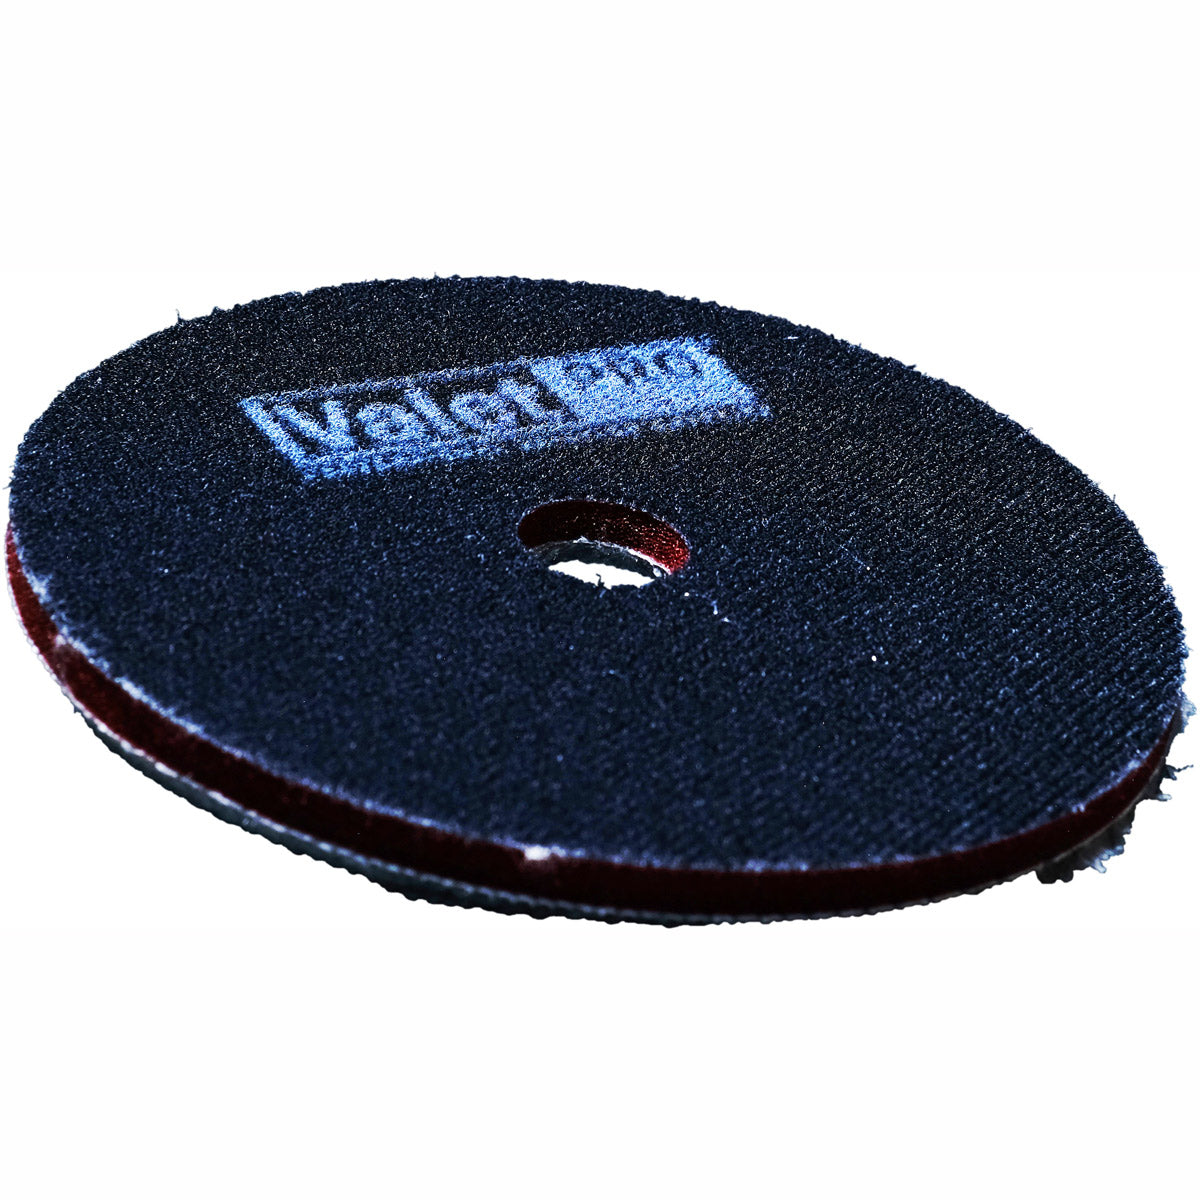 ValetPRO Maximum Cut Polishing Pad - Heavy Microfiber Machine Polishing Pad